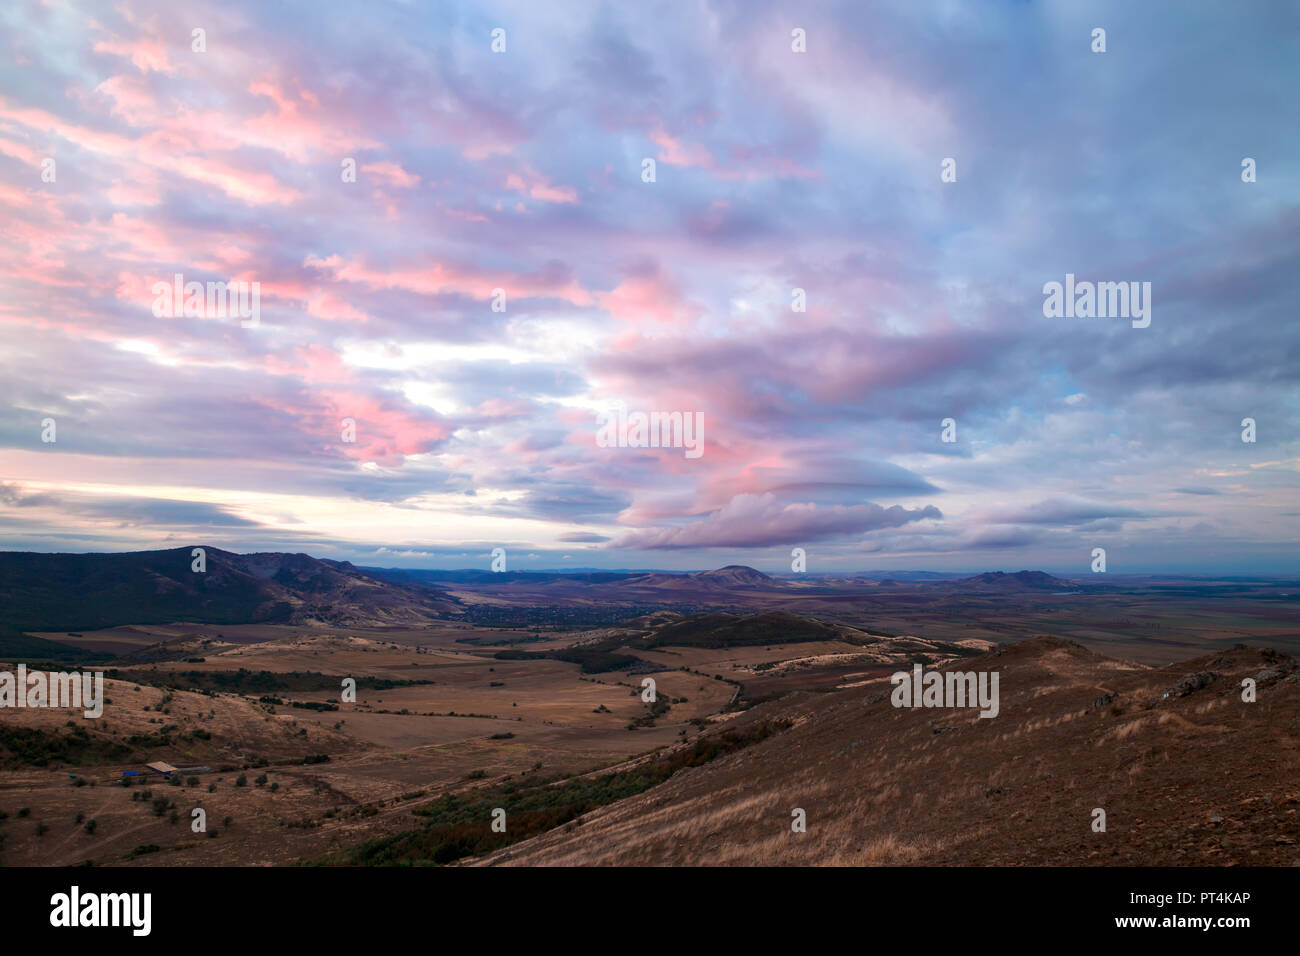 Panorama view of the mountains Macin, Romania with spectacular sky Stock Photo